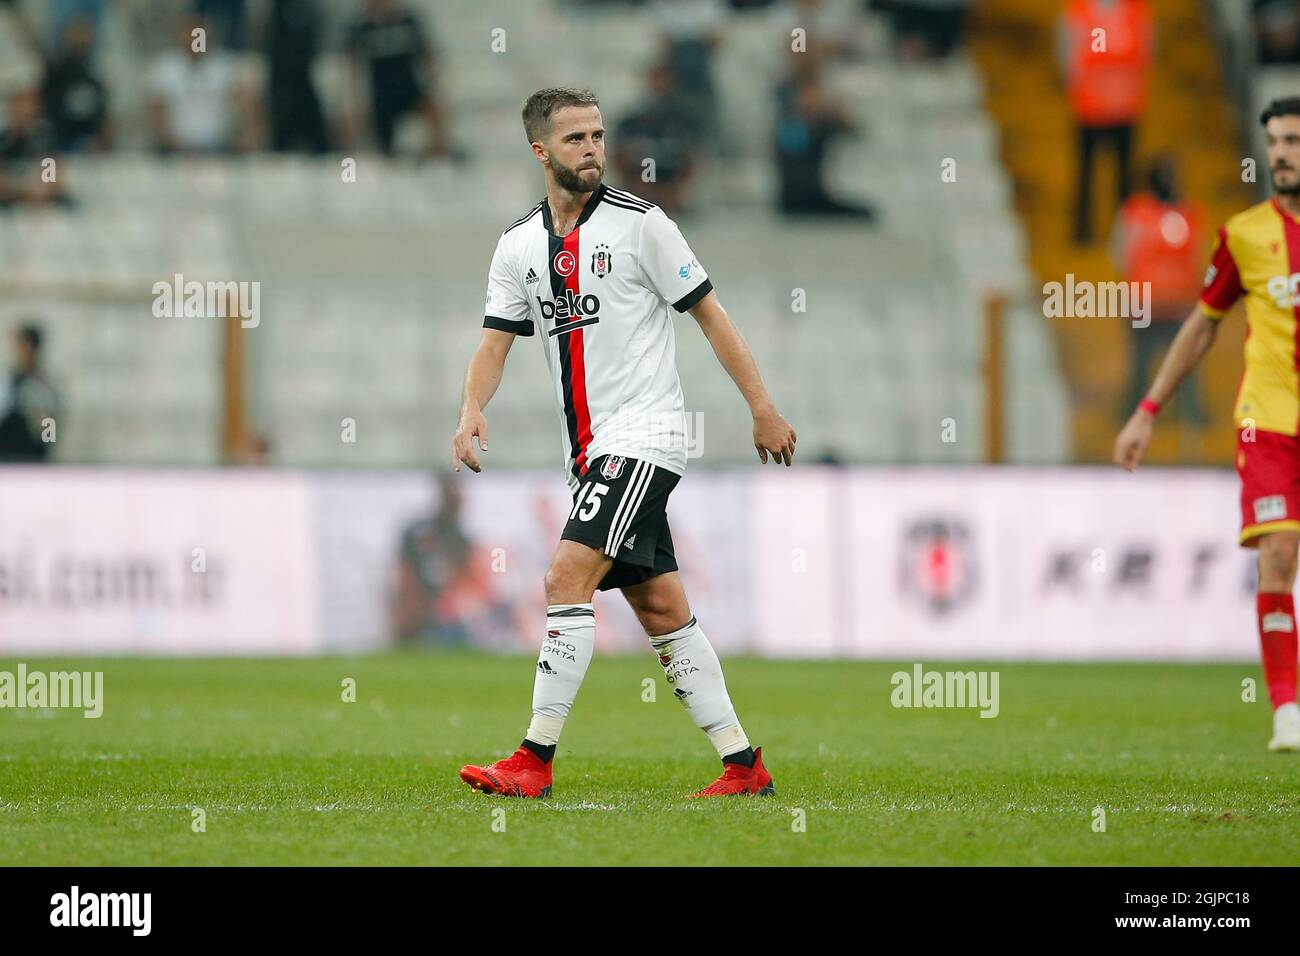 ISTANBUL, TURKEY - NOVEMBER 6: Miralem Pjanic of Besiktas JK during the  Super Lig match between Besiktas